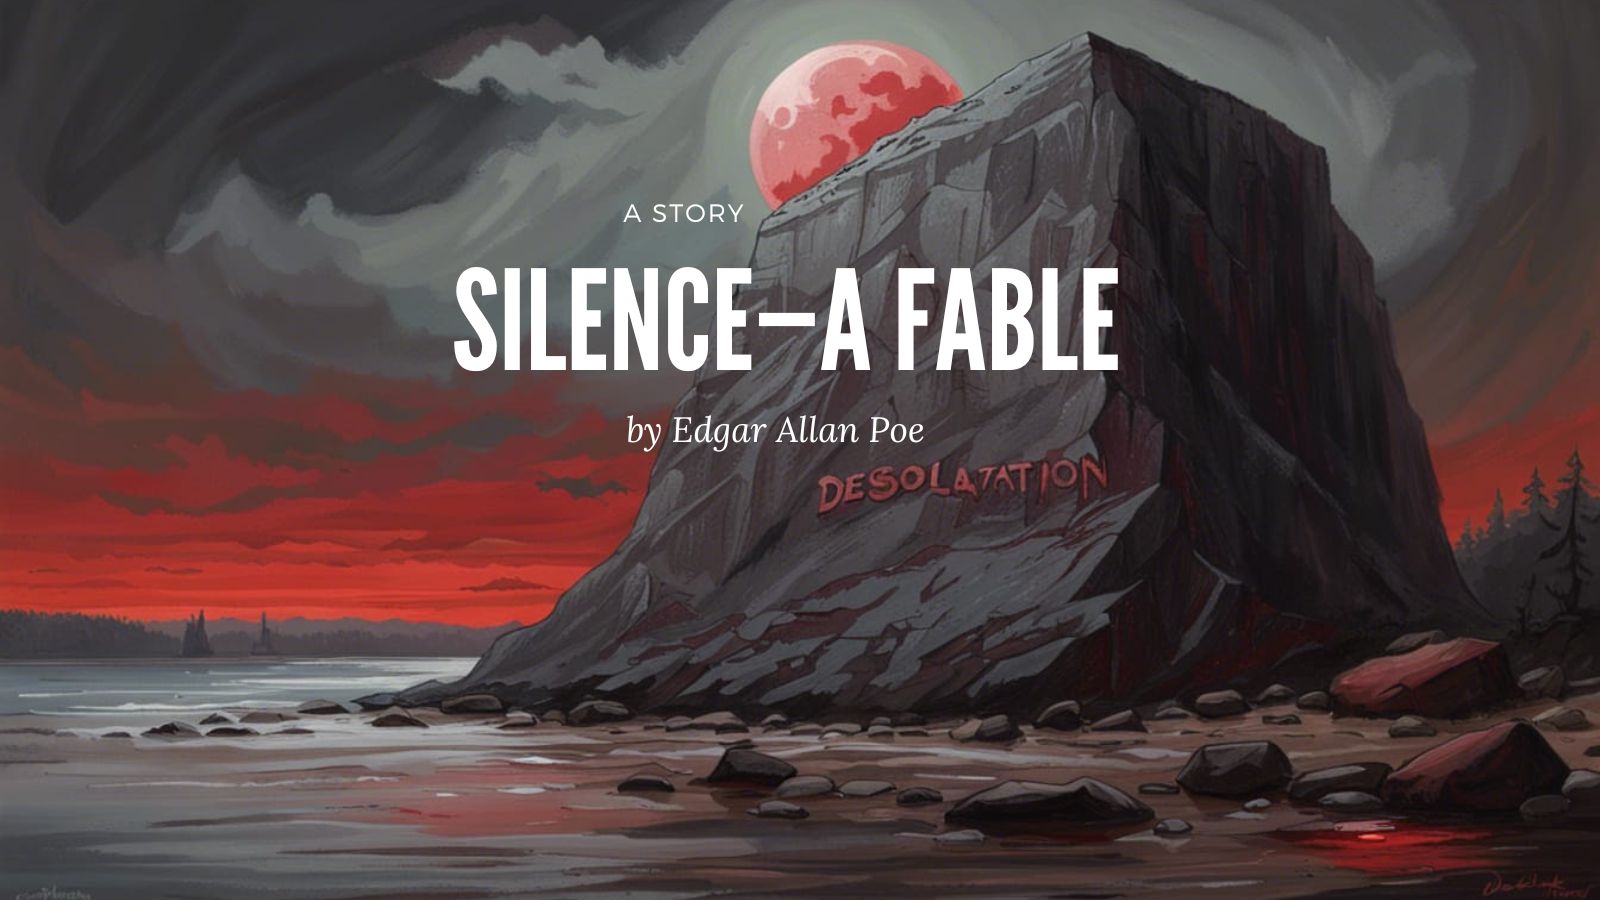 SILENCE—A FABLE by Edgar Allan Poe